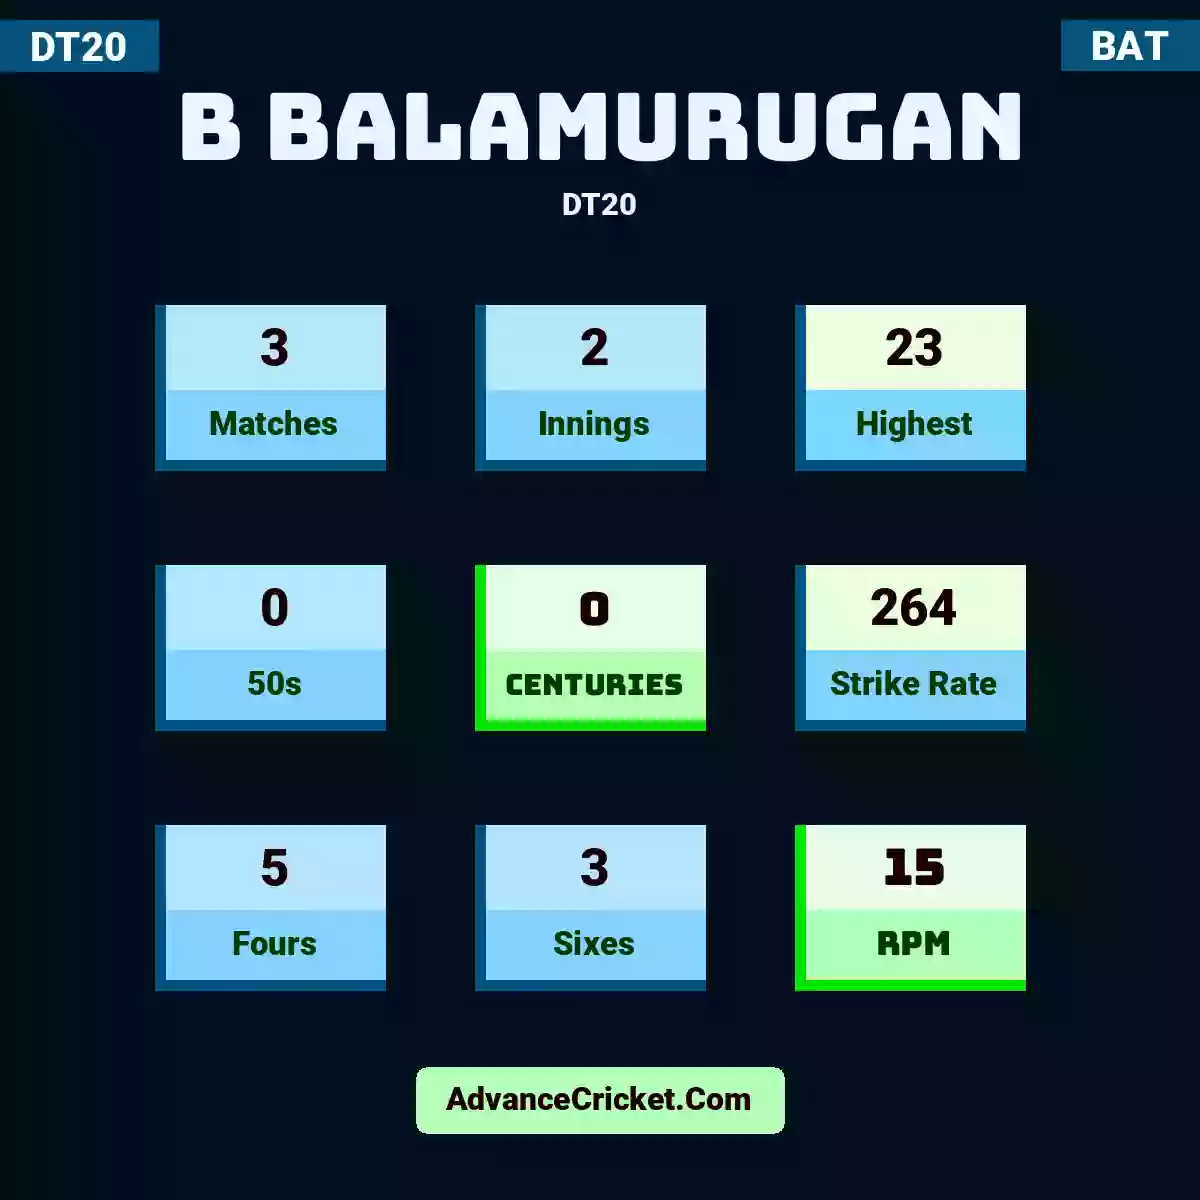 B Balamurugan DT20 , B Balamurugan played 3 matches, scored 23 runs as highest, 0 half-centuries, and 0 centuries, with a strike rate of 264. B.Balamurugan hit 5 fours and 3 sixes, with an RPM of 15.